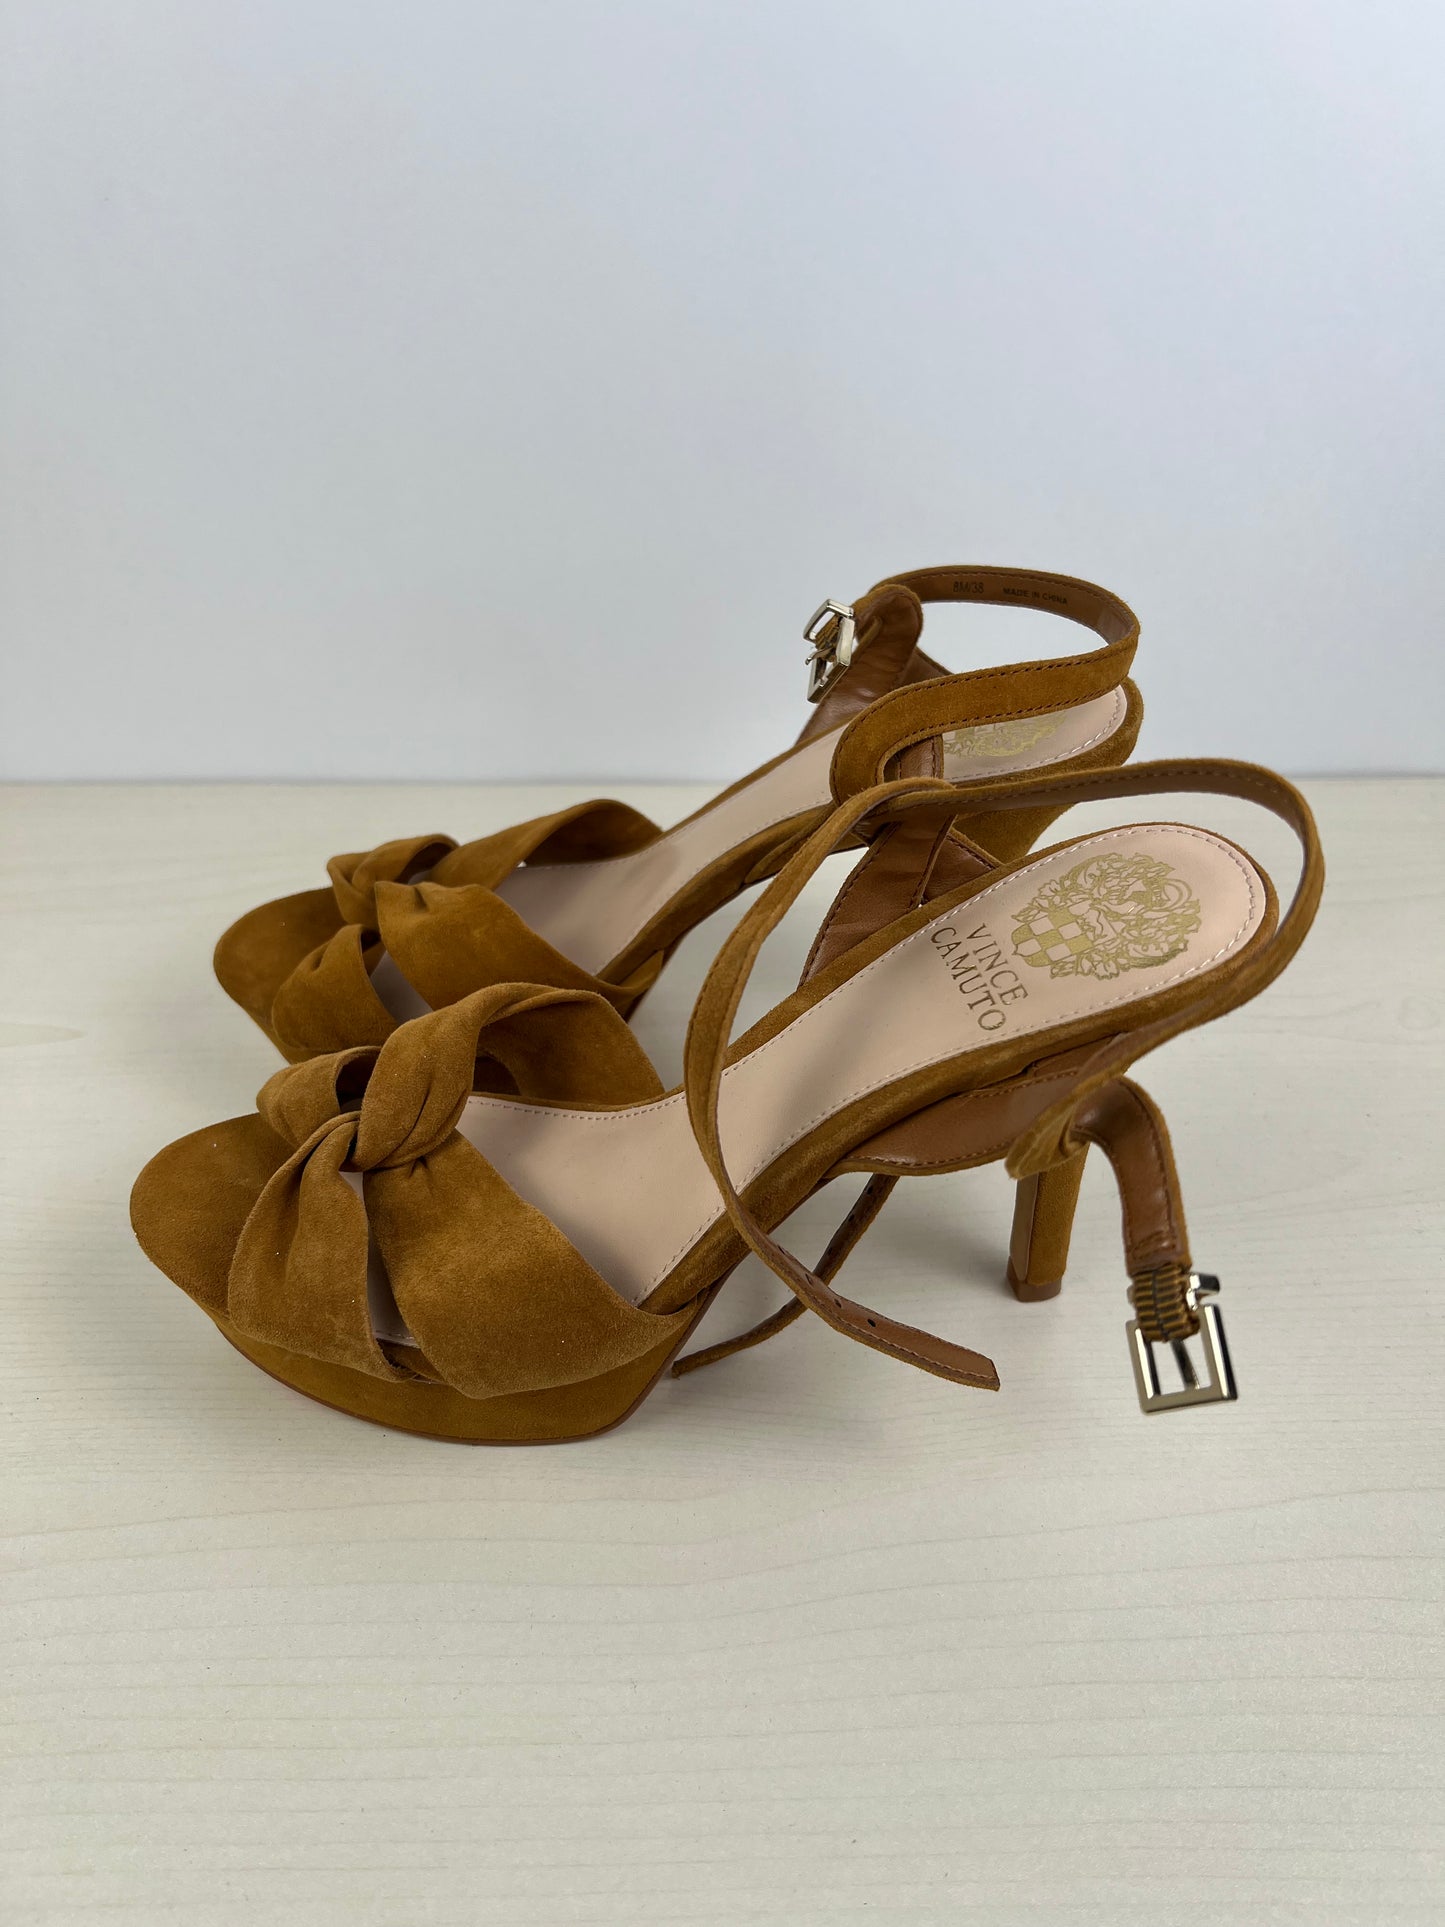 Sandals Heels Platform By Vince Camuto  Size: 8